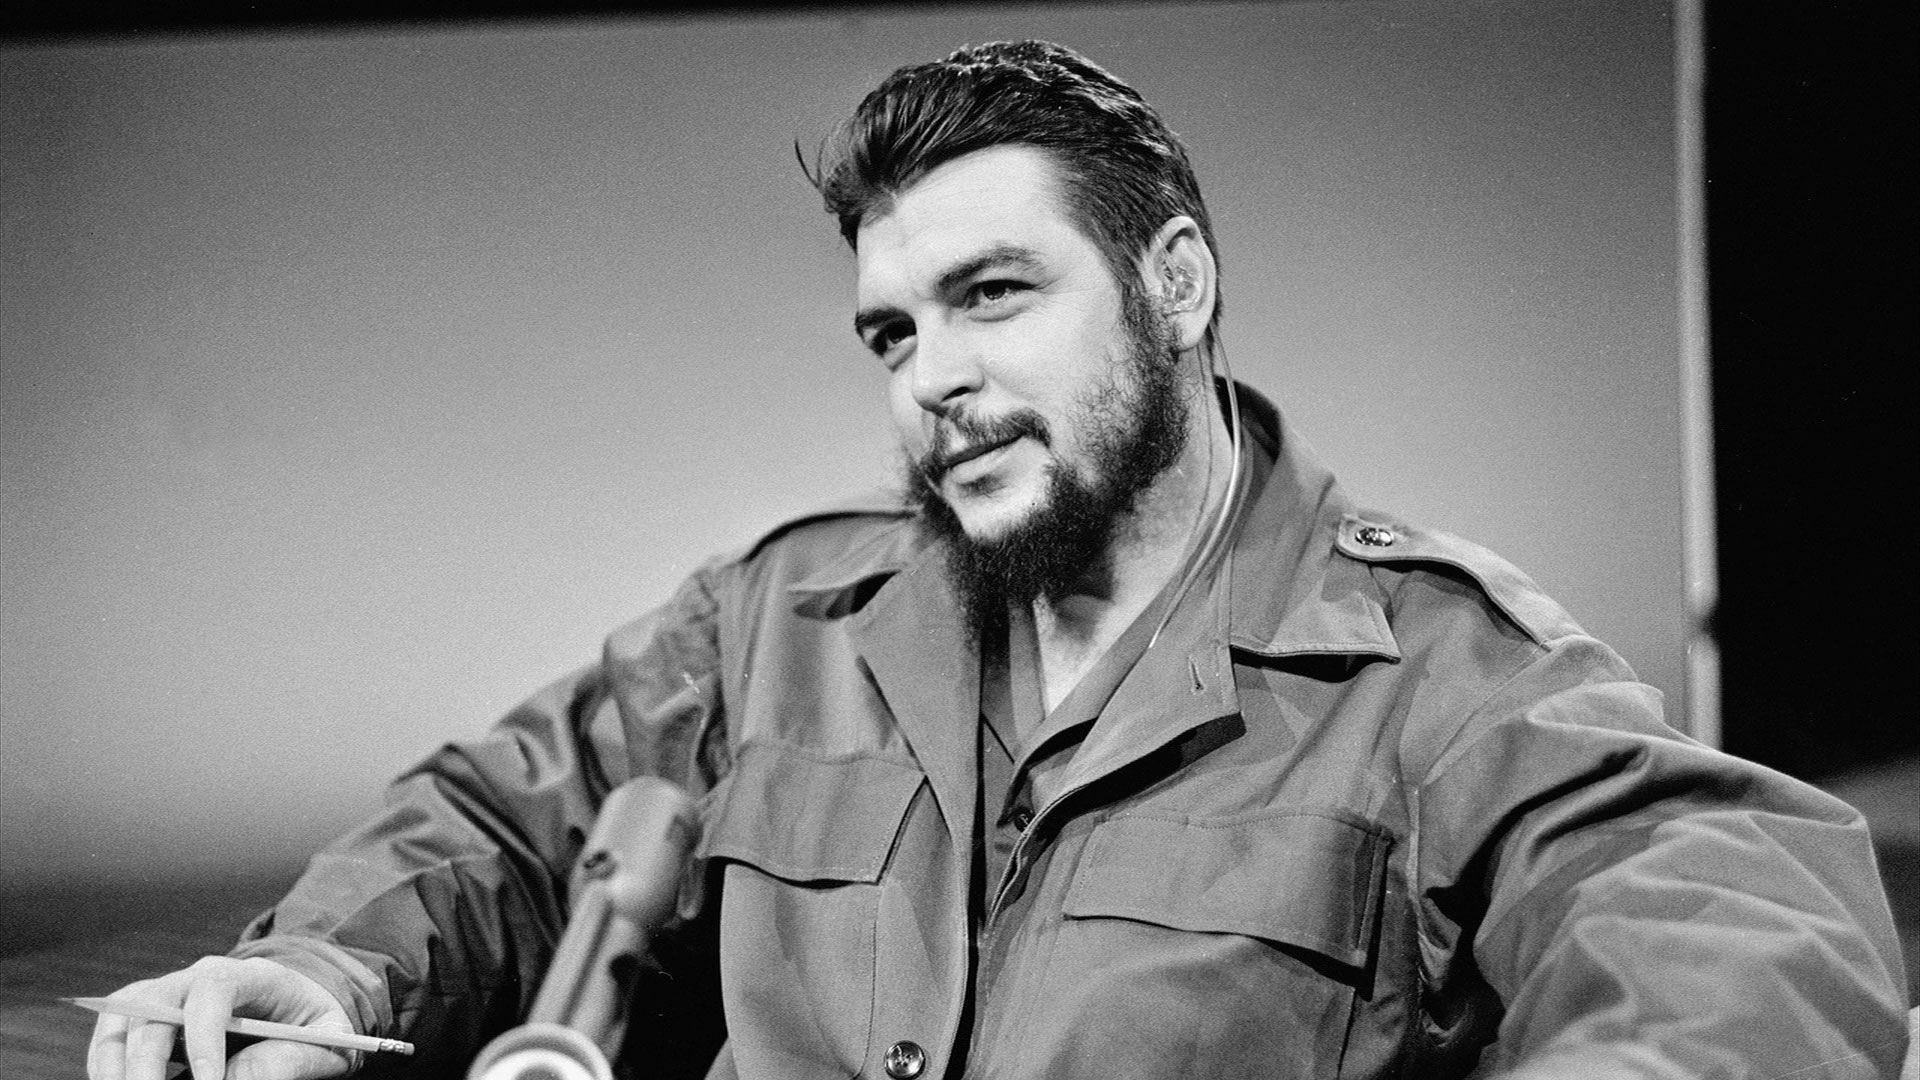 Che Guevara T Shirt Blue and Red Portrait Cuban Revolution